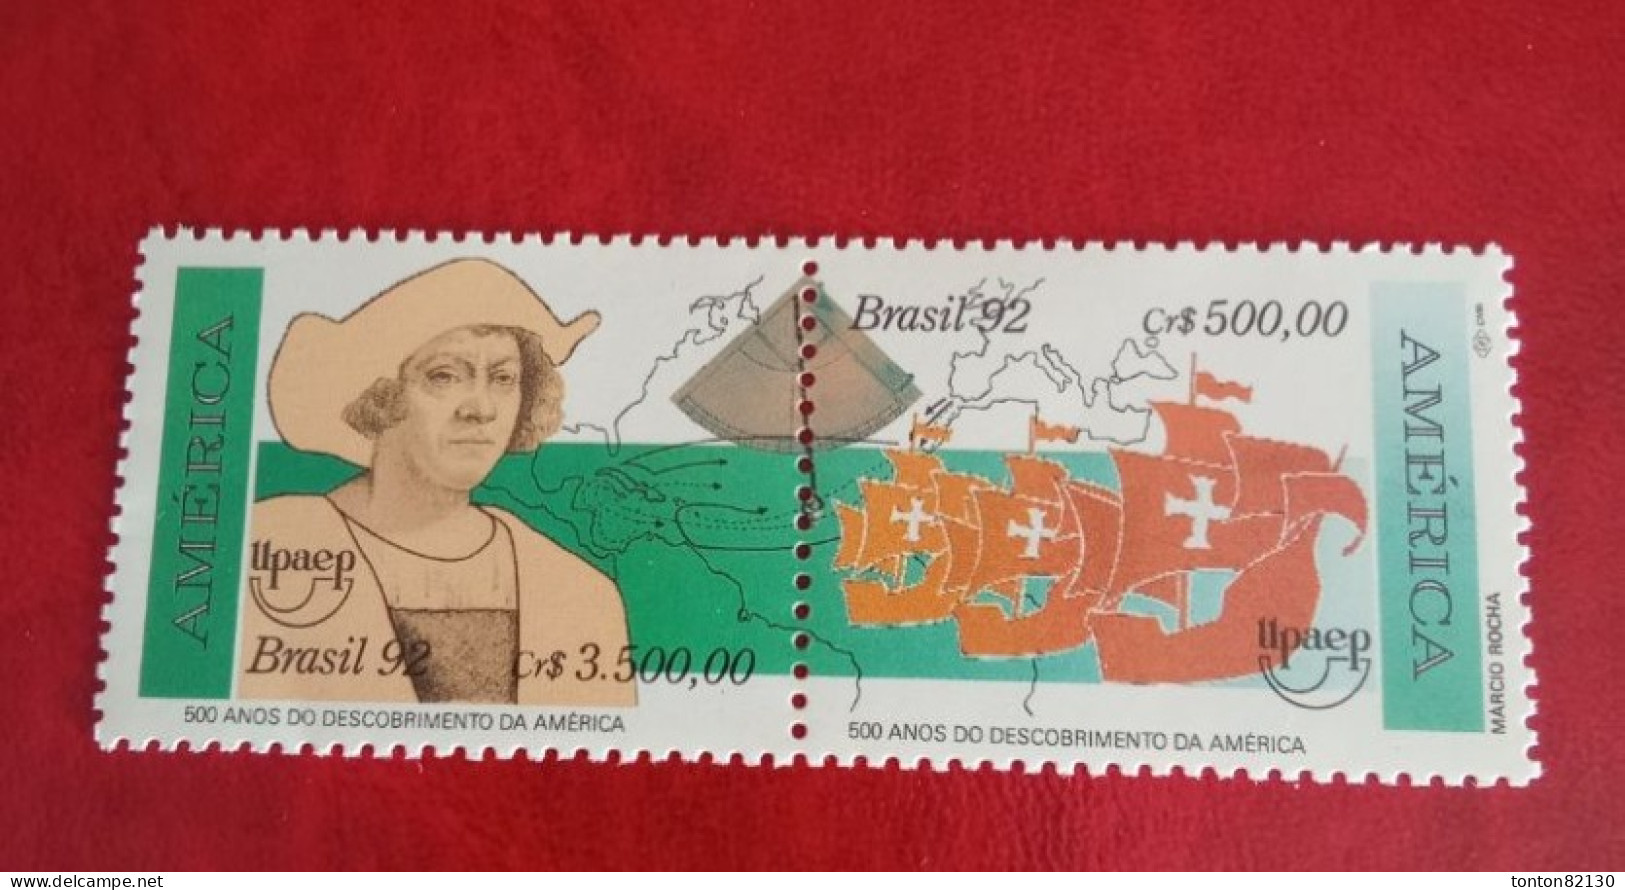 BRESIL    N° 2062 / 63 NEUF**  GOMME FRAICHEUR POSTALE - Unused Stamps